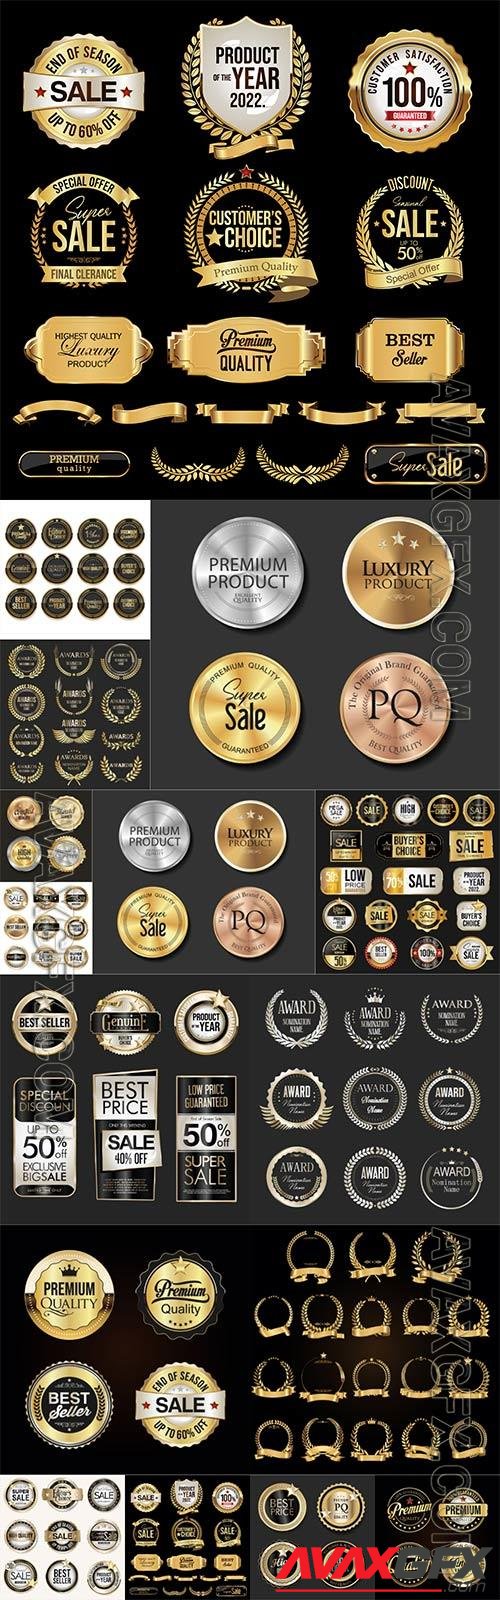 Golden badges, labels and laurels sale in vector